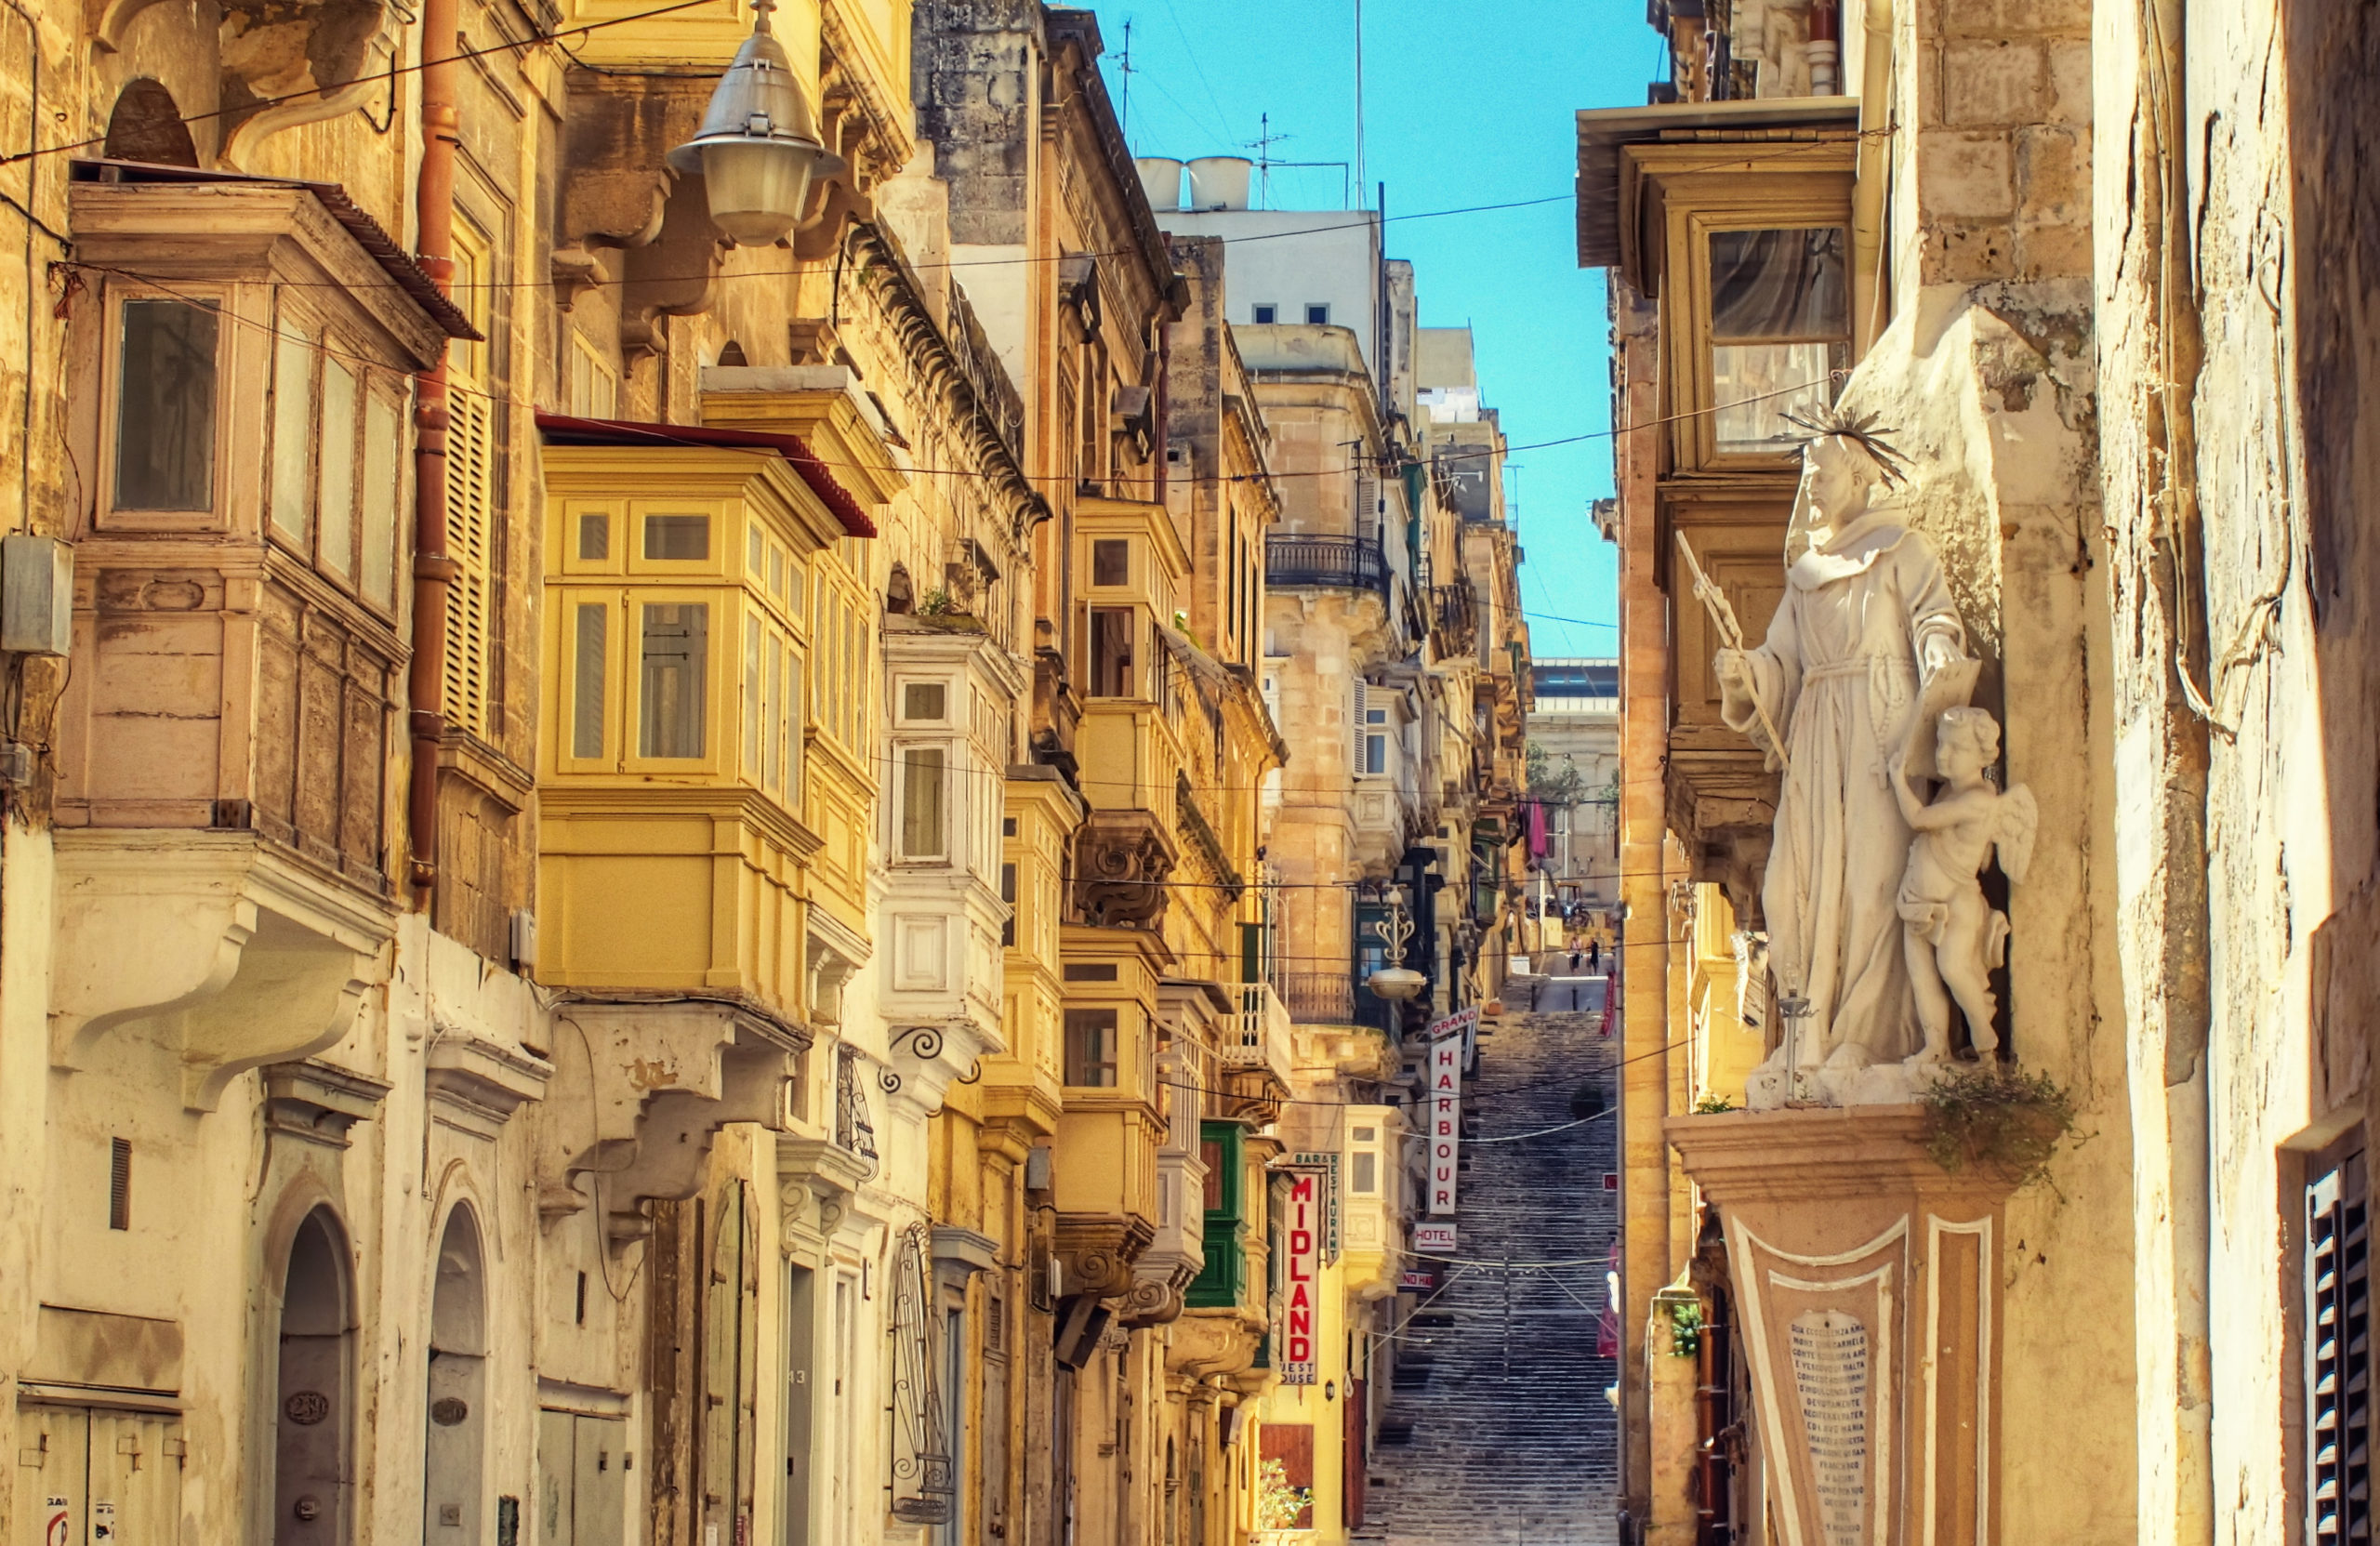 The hilly streets of Valletta, Malta.